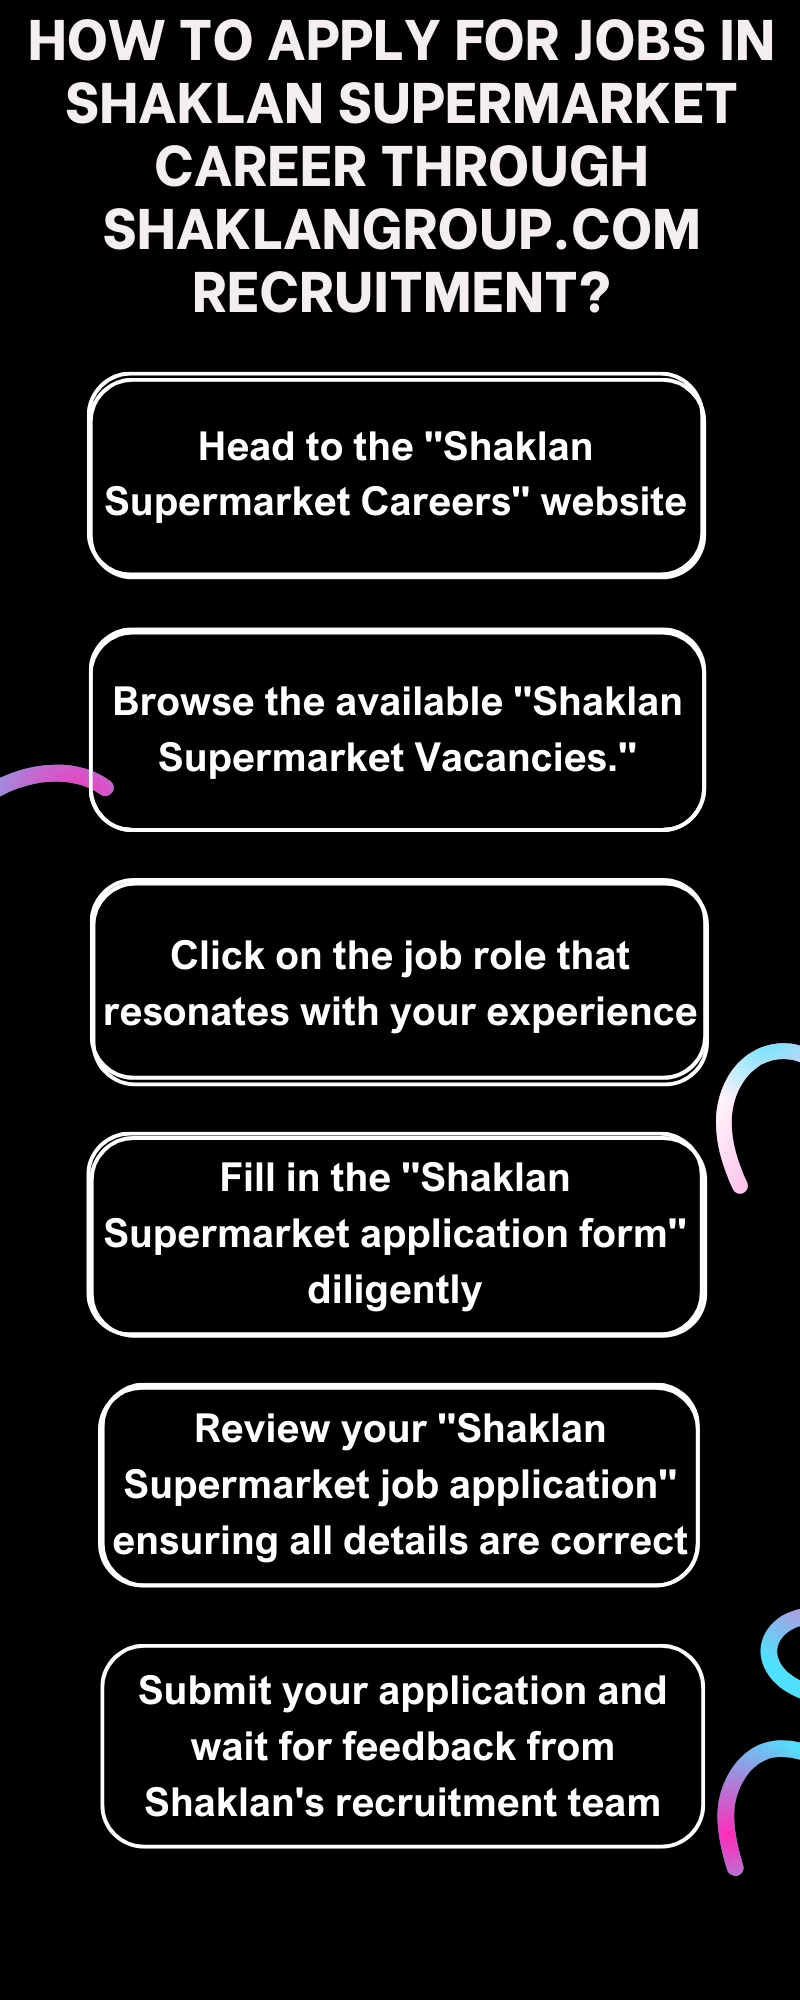 How to Apply for Jobs in Shaklan Supermarket Career through shaklangroup.com recruitment?